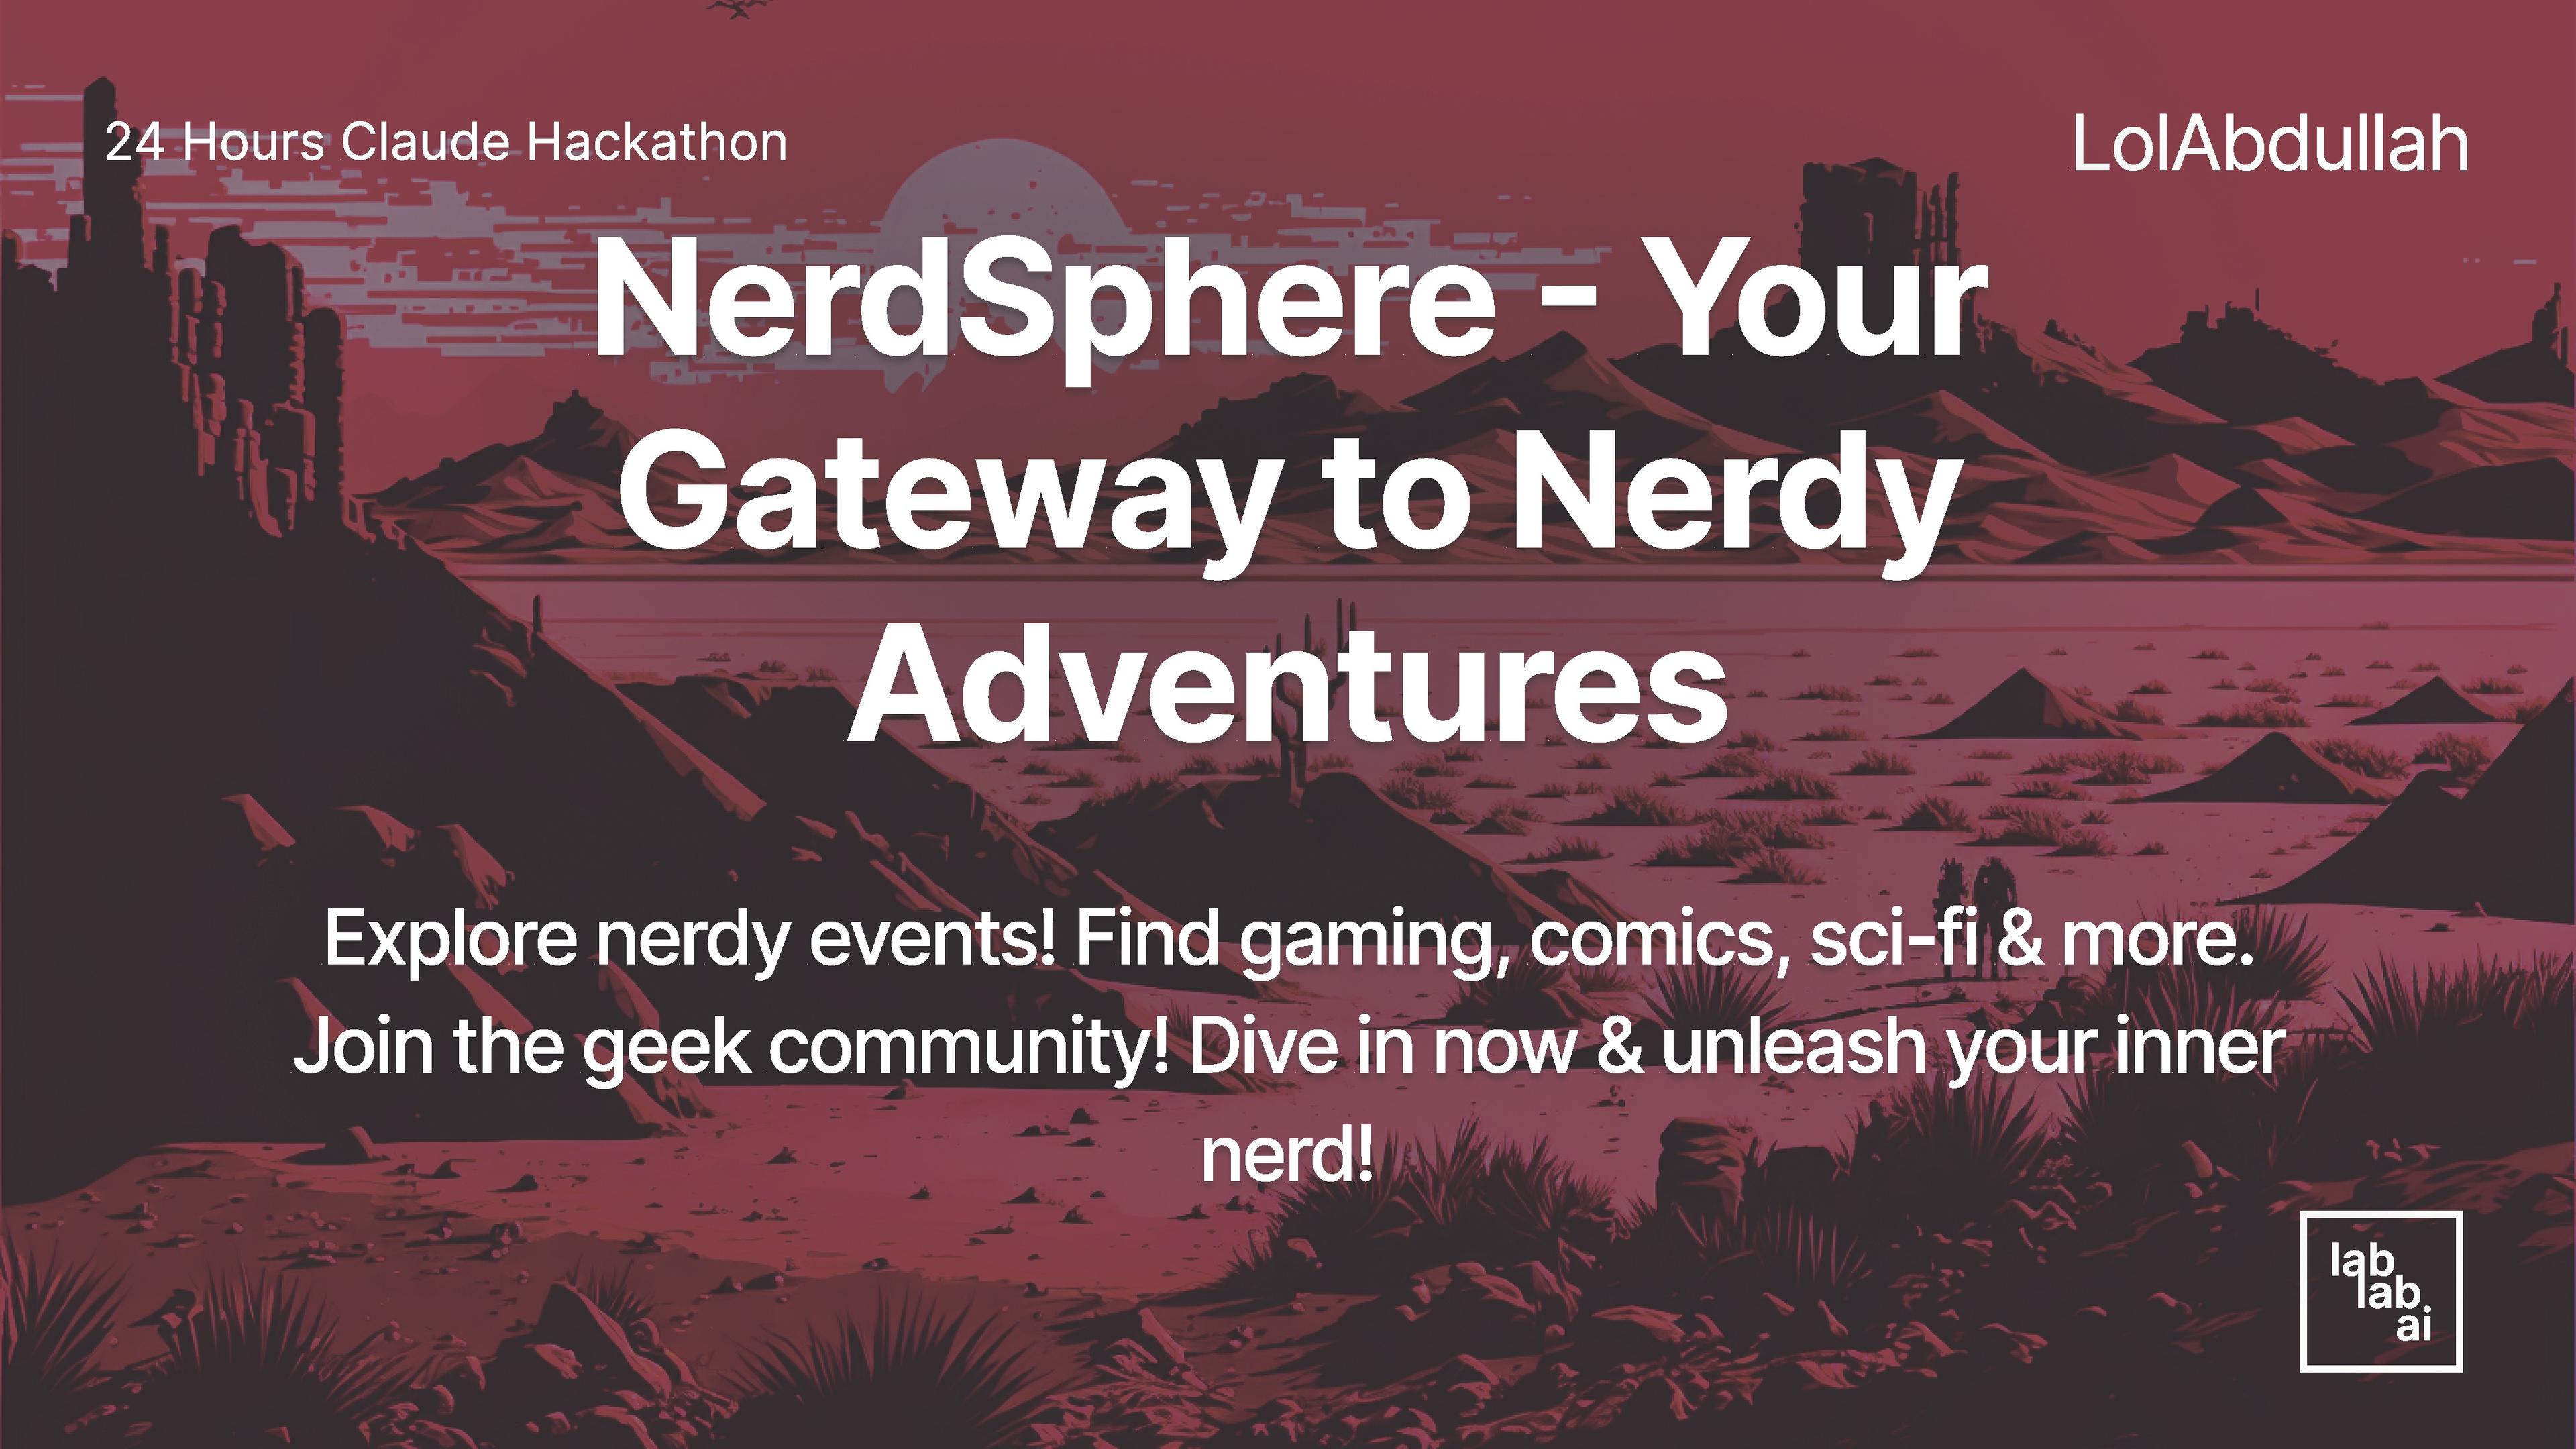 NerdSphere - Your Gateway to Nerdy Adventures